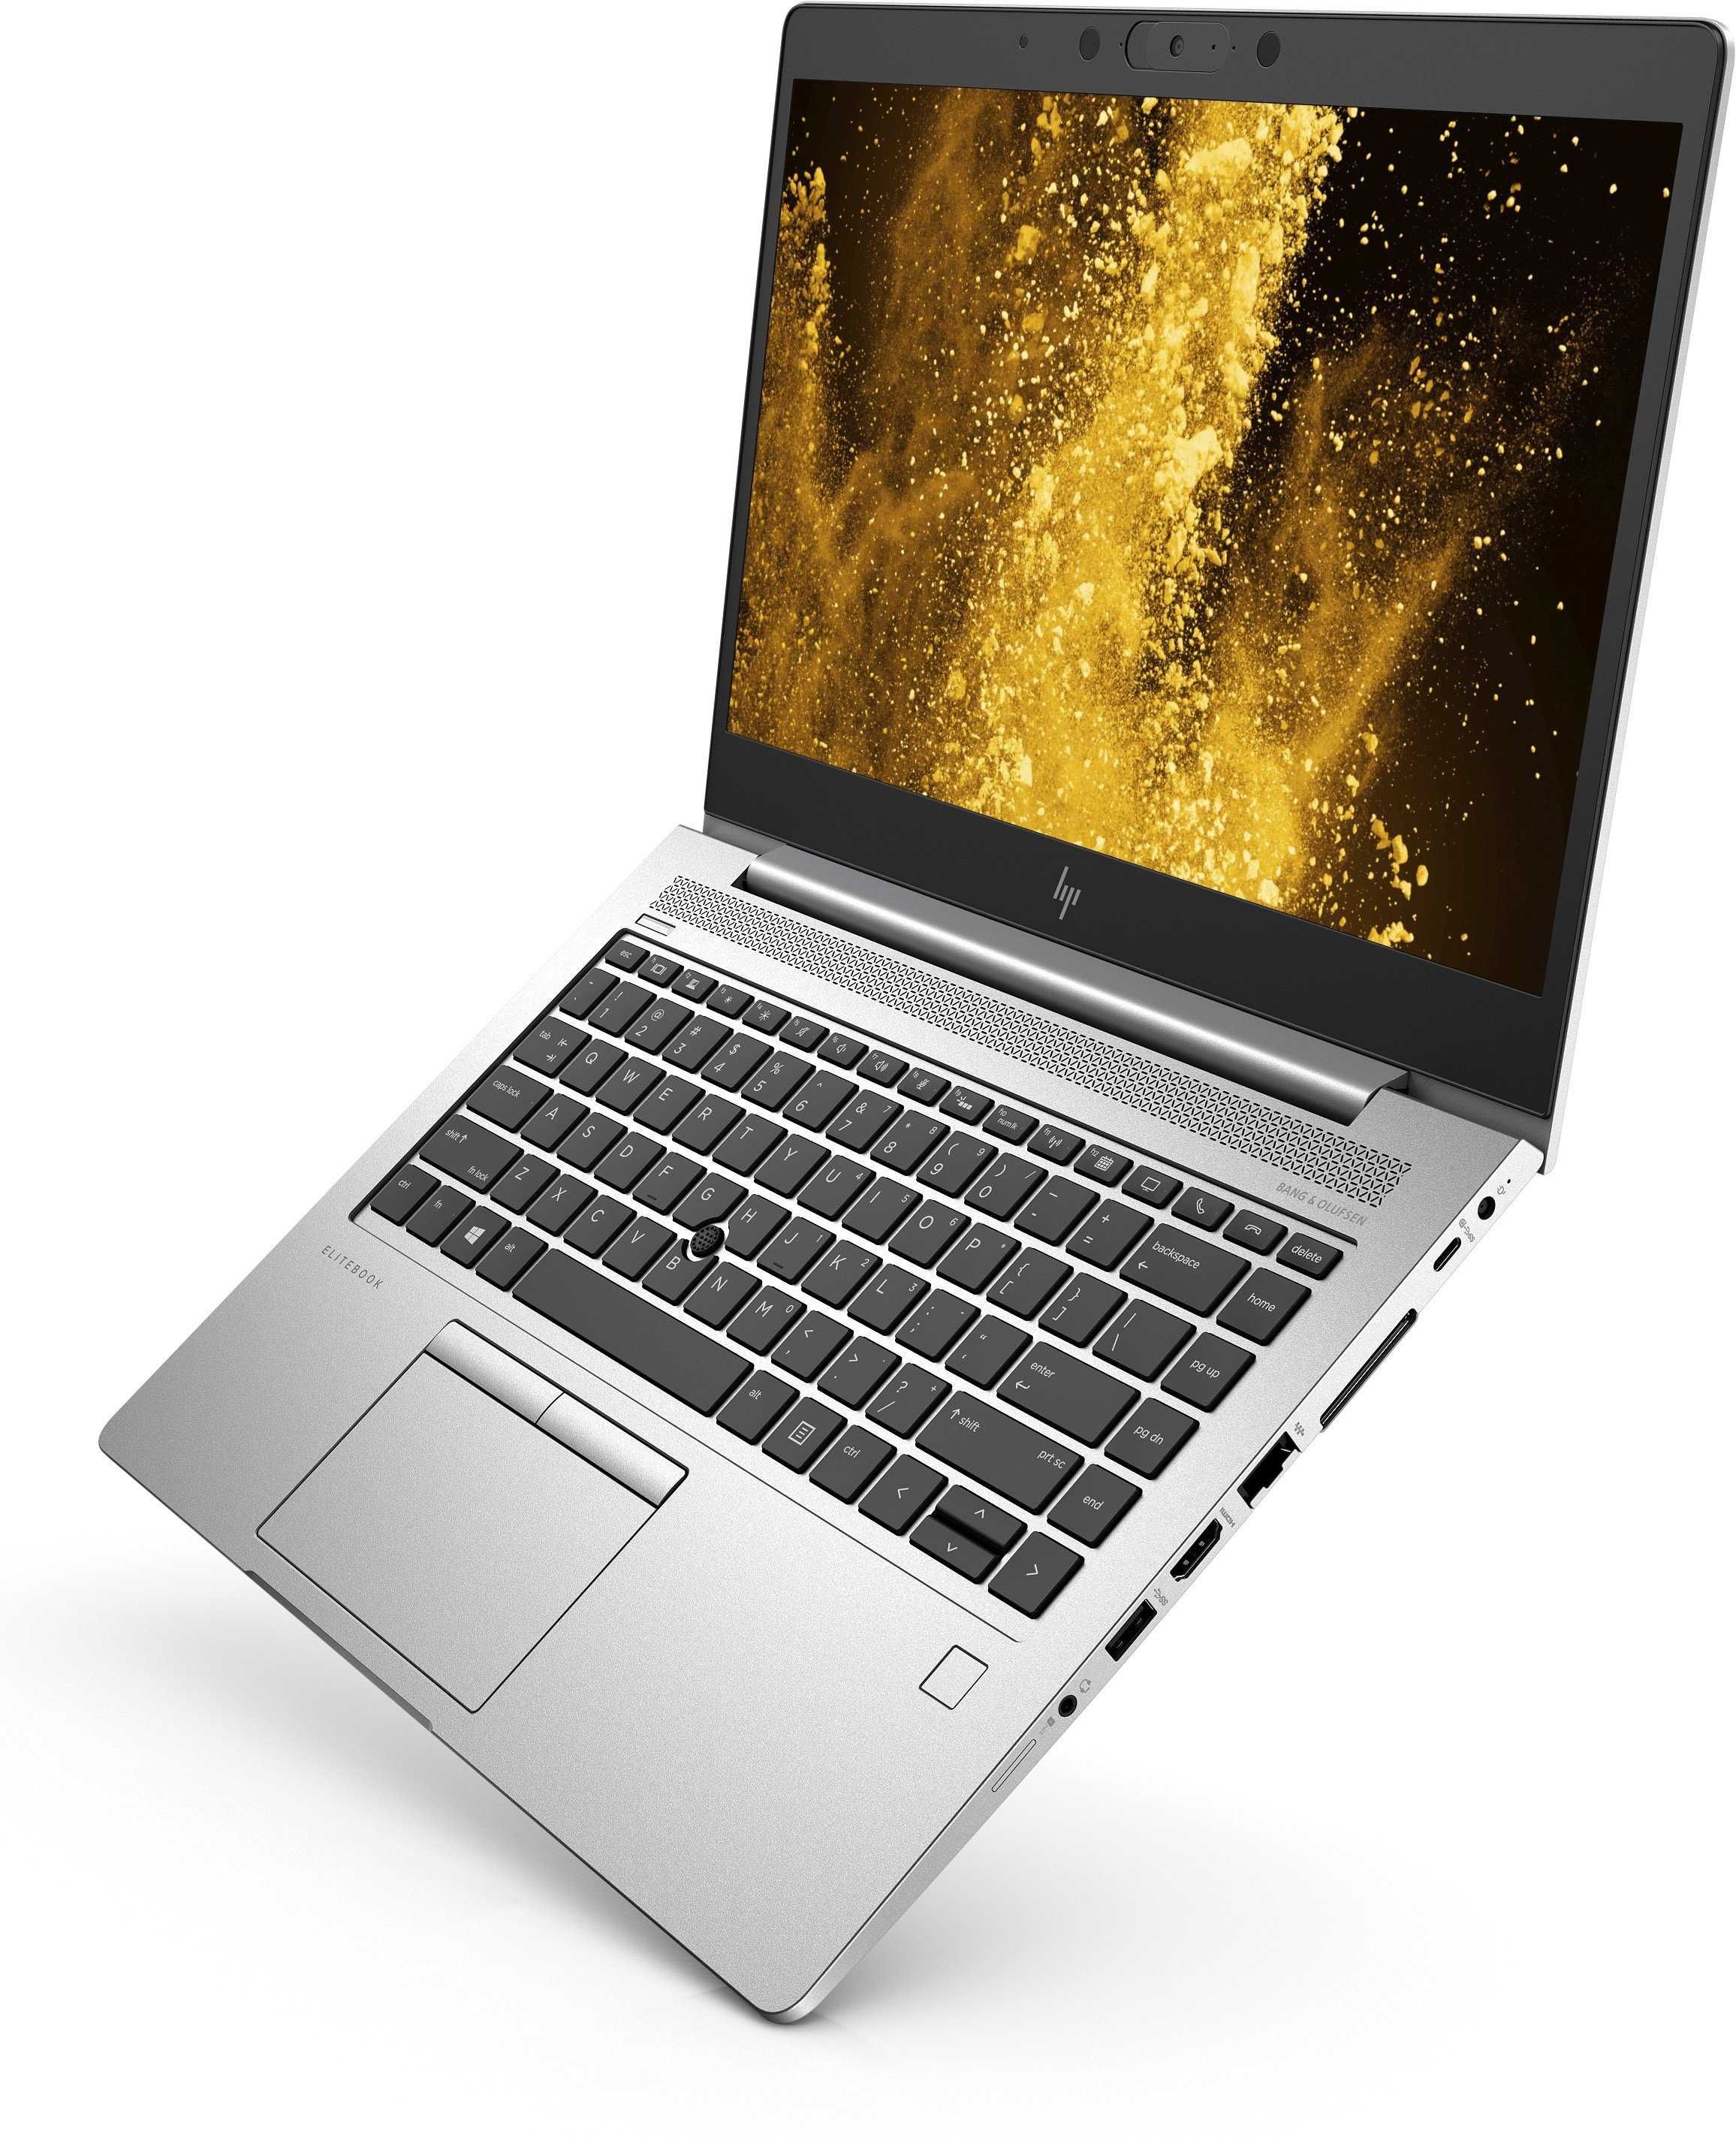 HP EliteBook 745 G6, 14.0" FHD IPS, Ryzen 5 3500U 16GB 256GB SSD